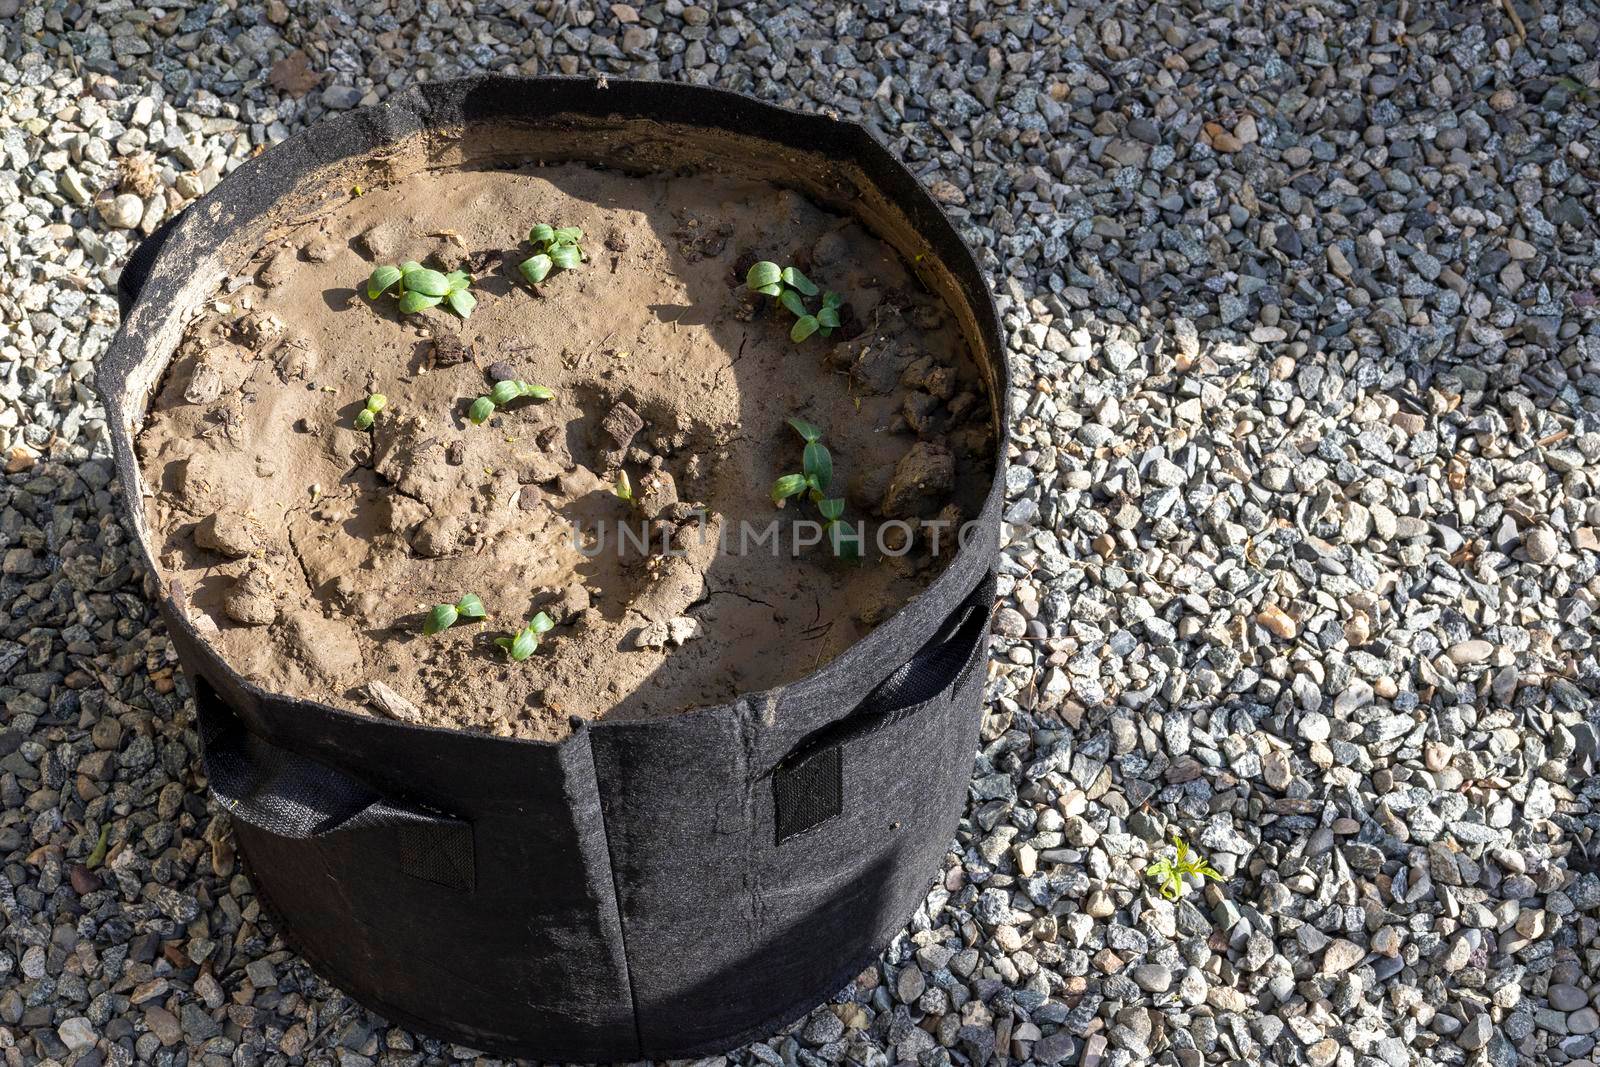 Vegetable growing in black grow bag or home gardening in grow bags concept